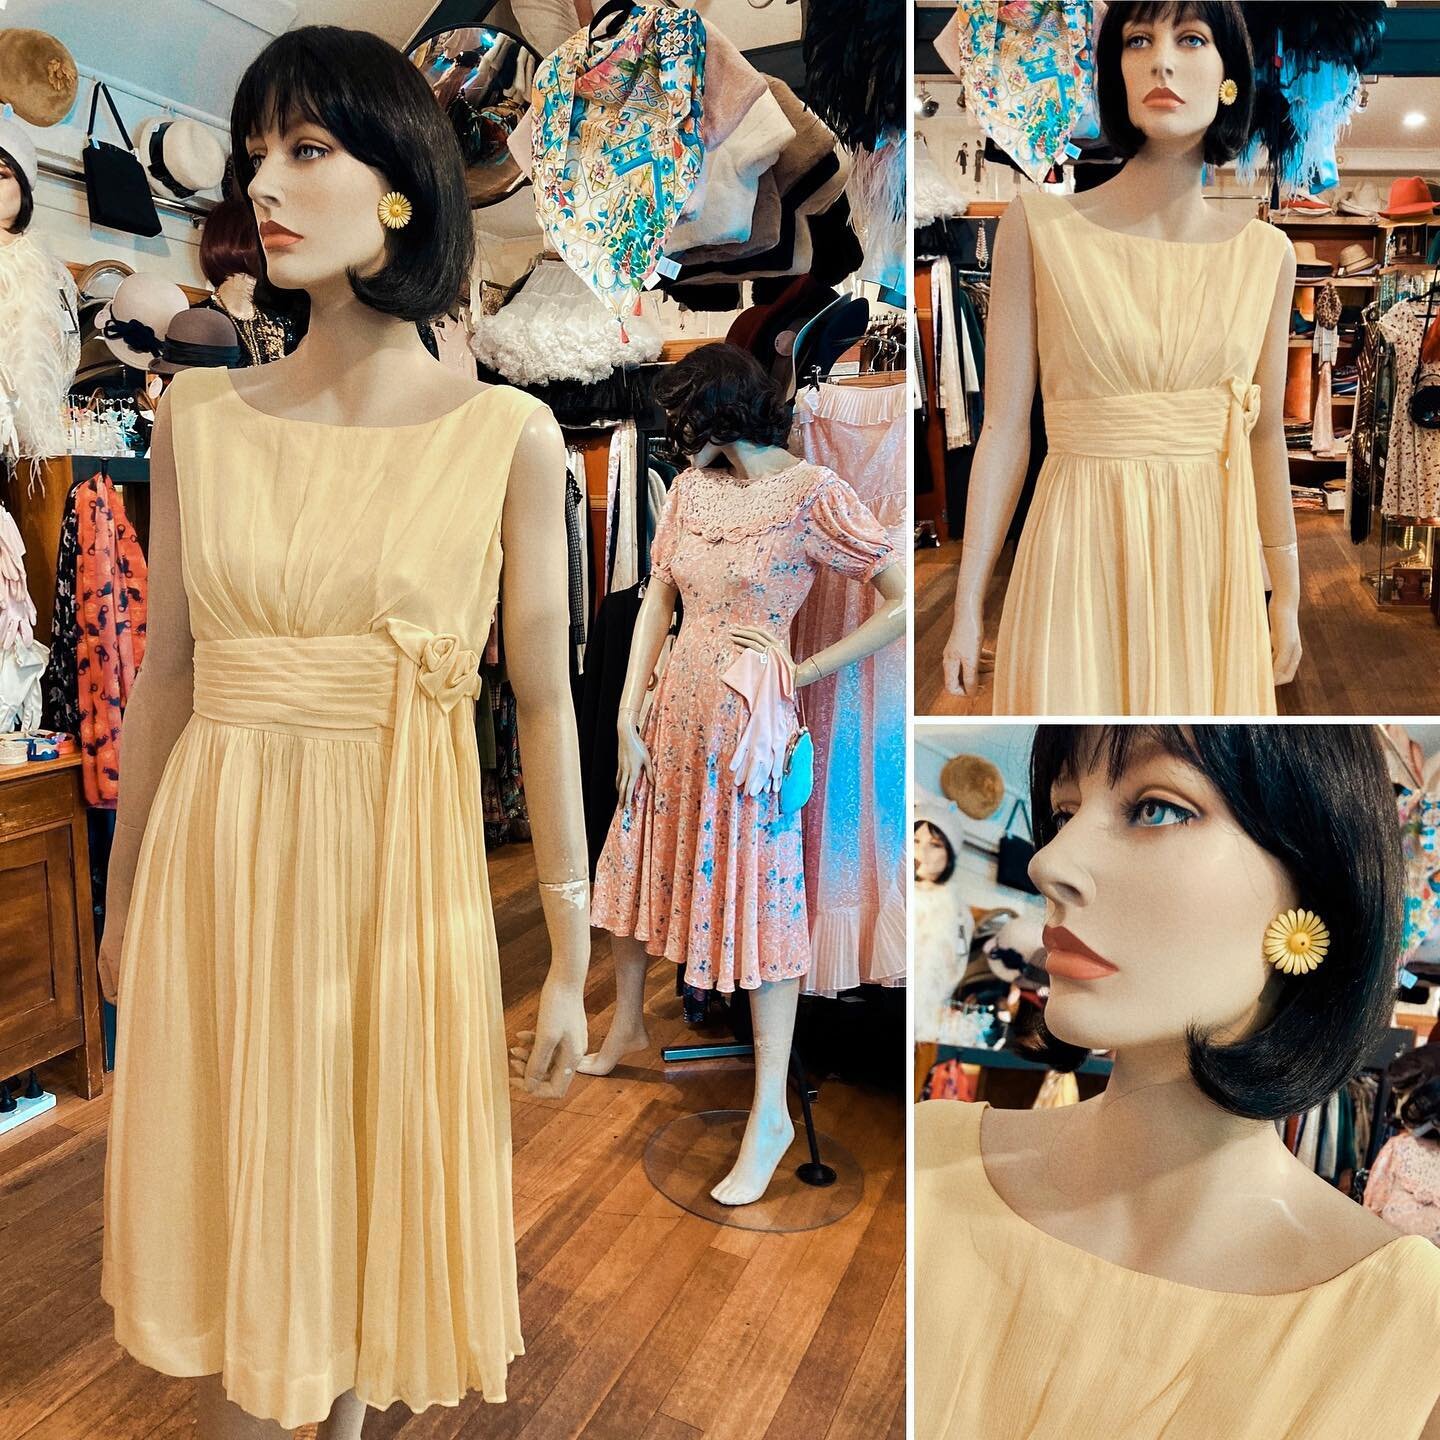 🍋 Gorgeous original 1960s fine crepe dress and jewellery in lemon yellow 🍋 😁 SOLD.
#vintage #truevintage #vintagefashion #1960s #vintagedress #leuravintage